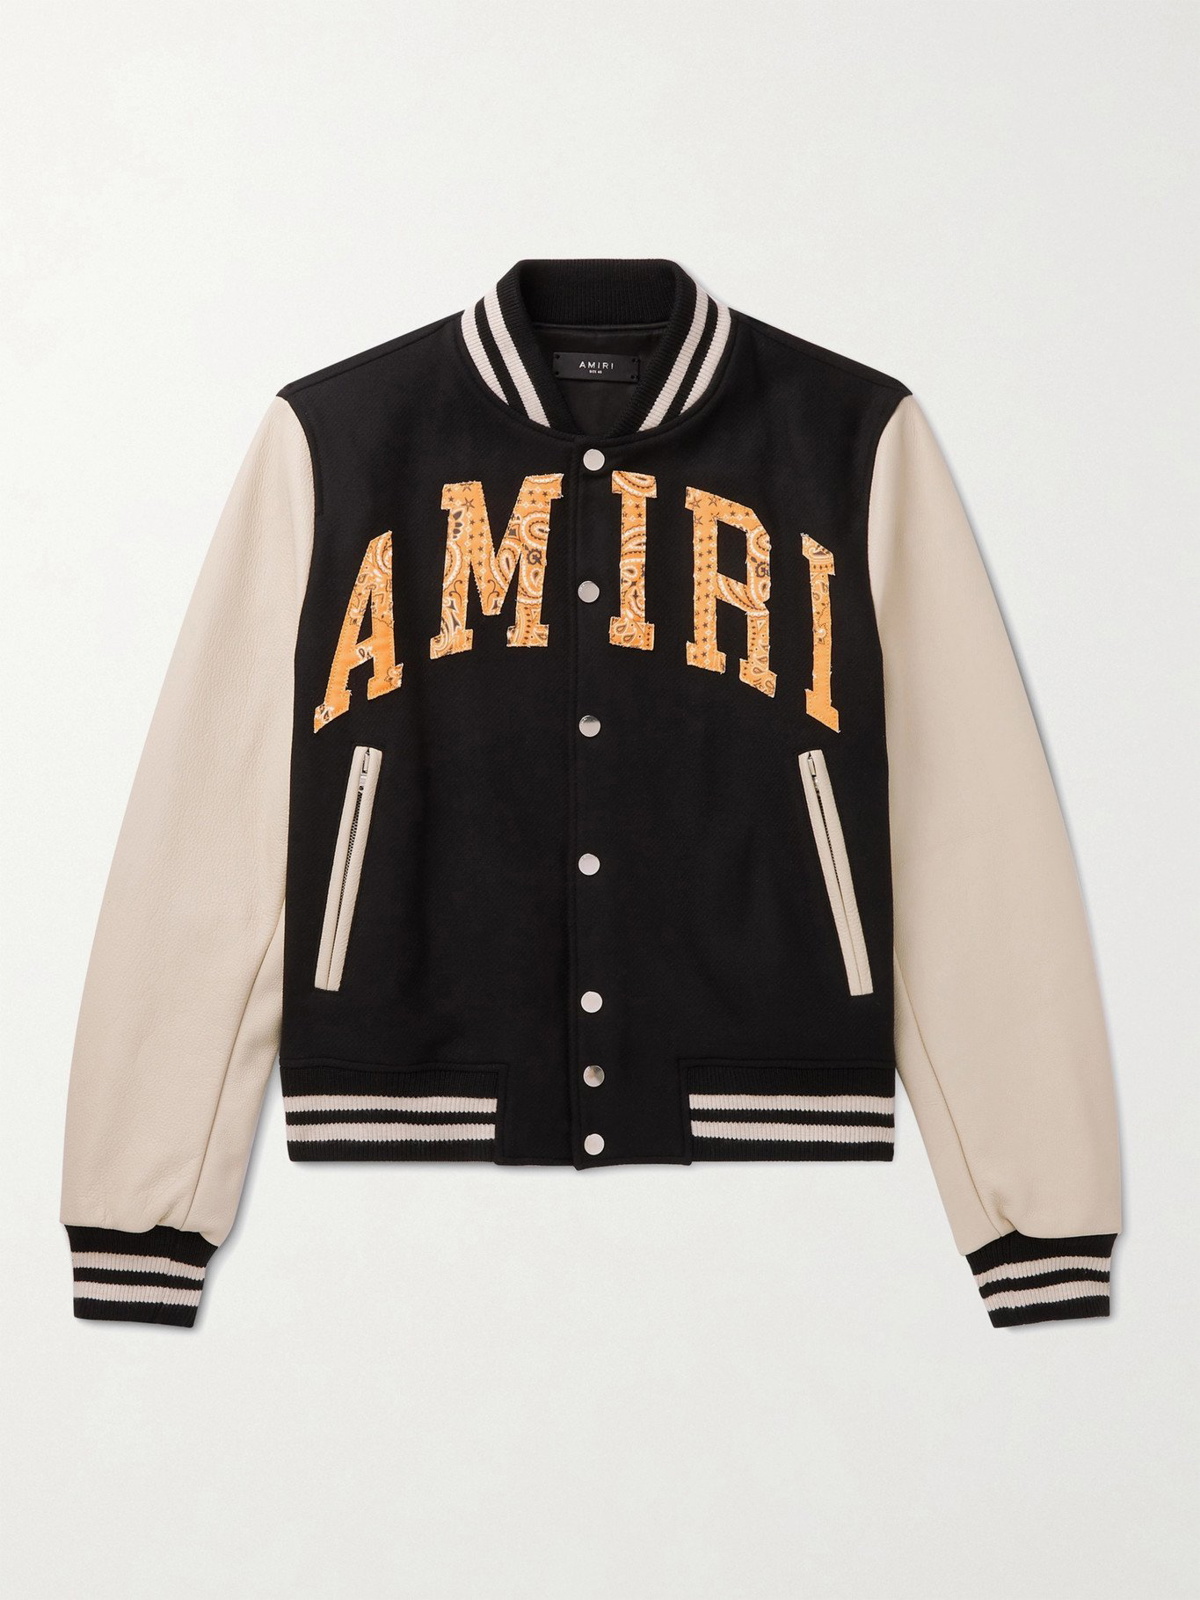 AMIRI Appliquéd Embroidered Wool-Blend and Leather Varsity Jacket